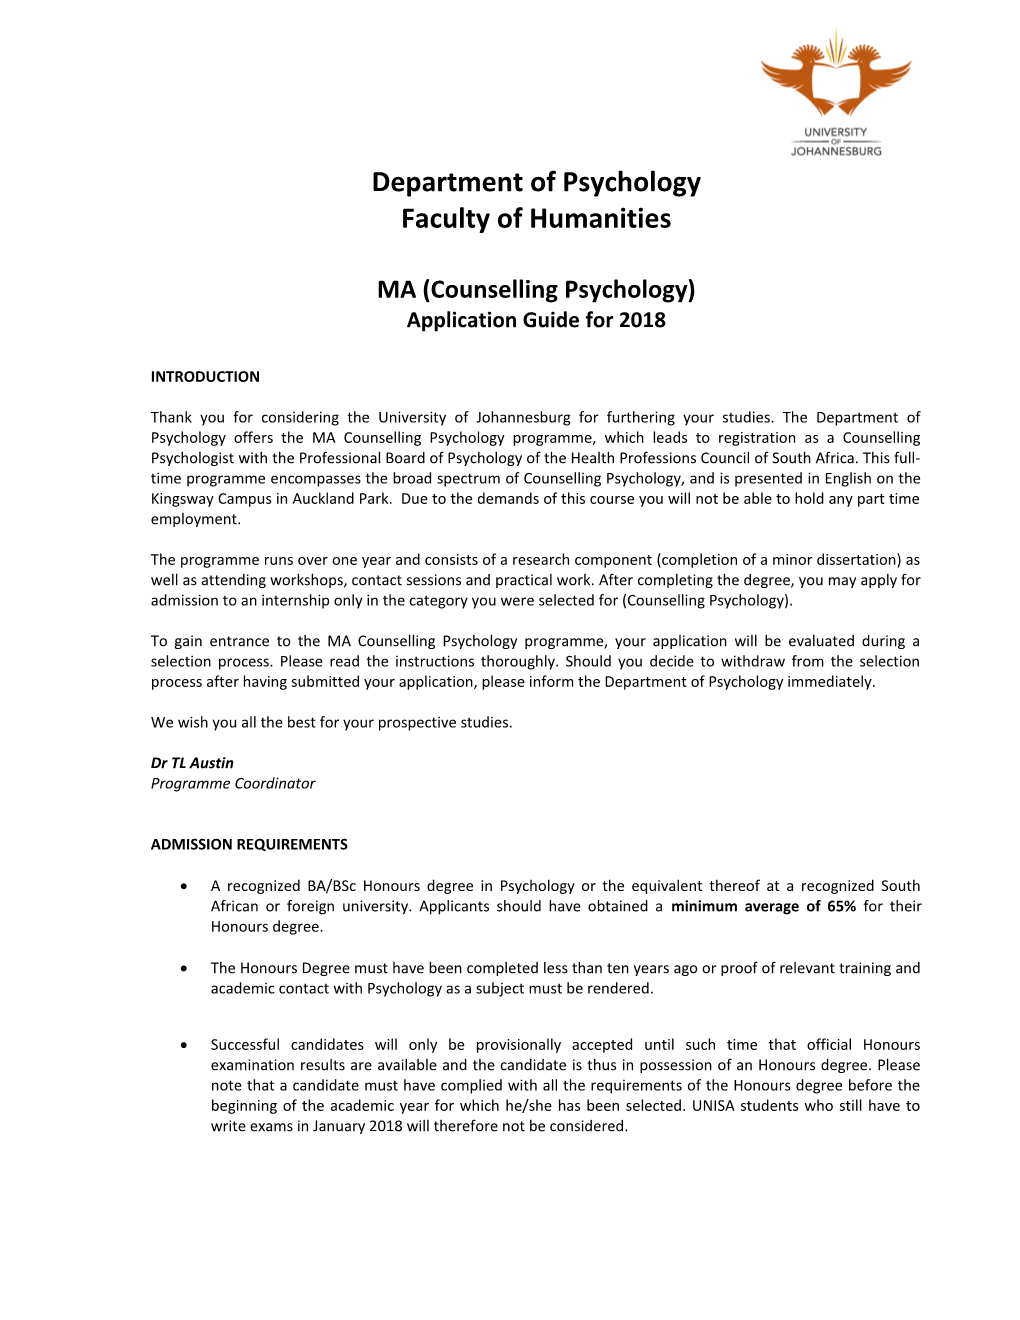 2016 UJ M Application Guide - Counselling Psychology